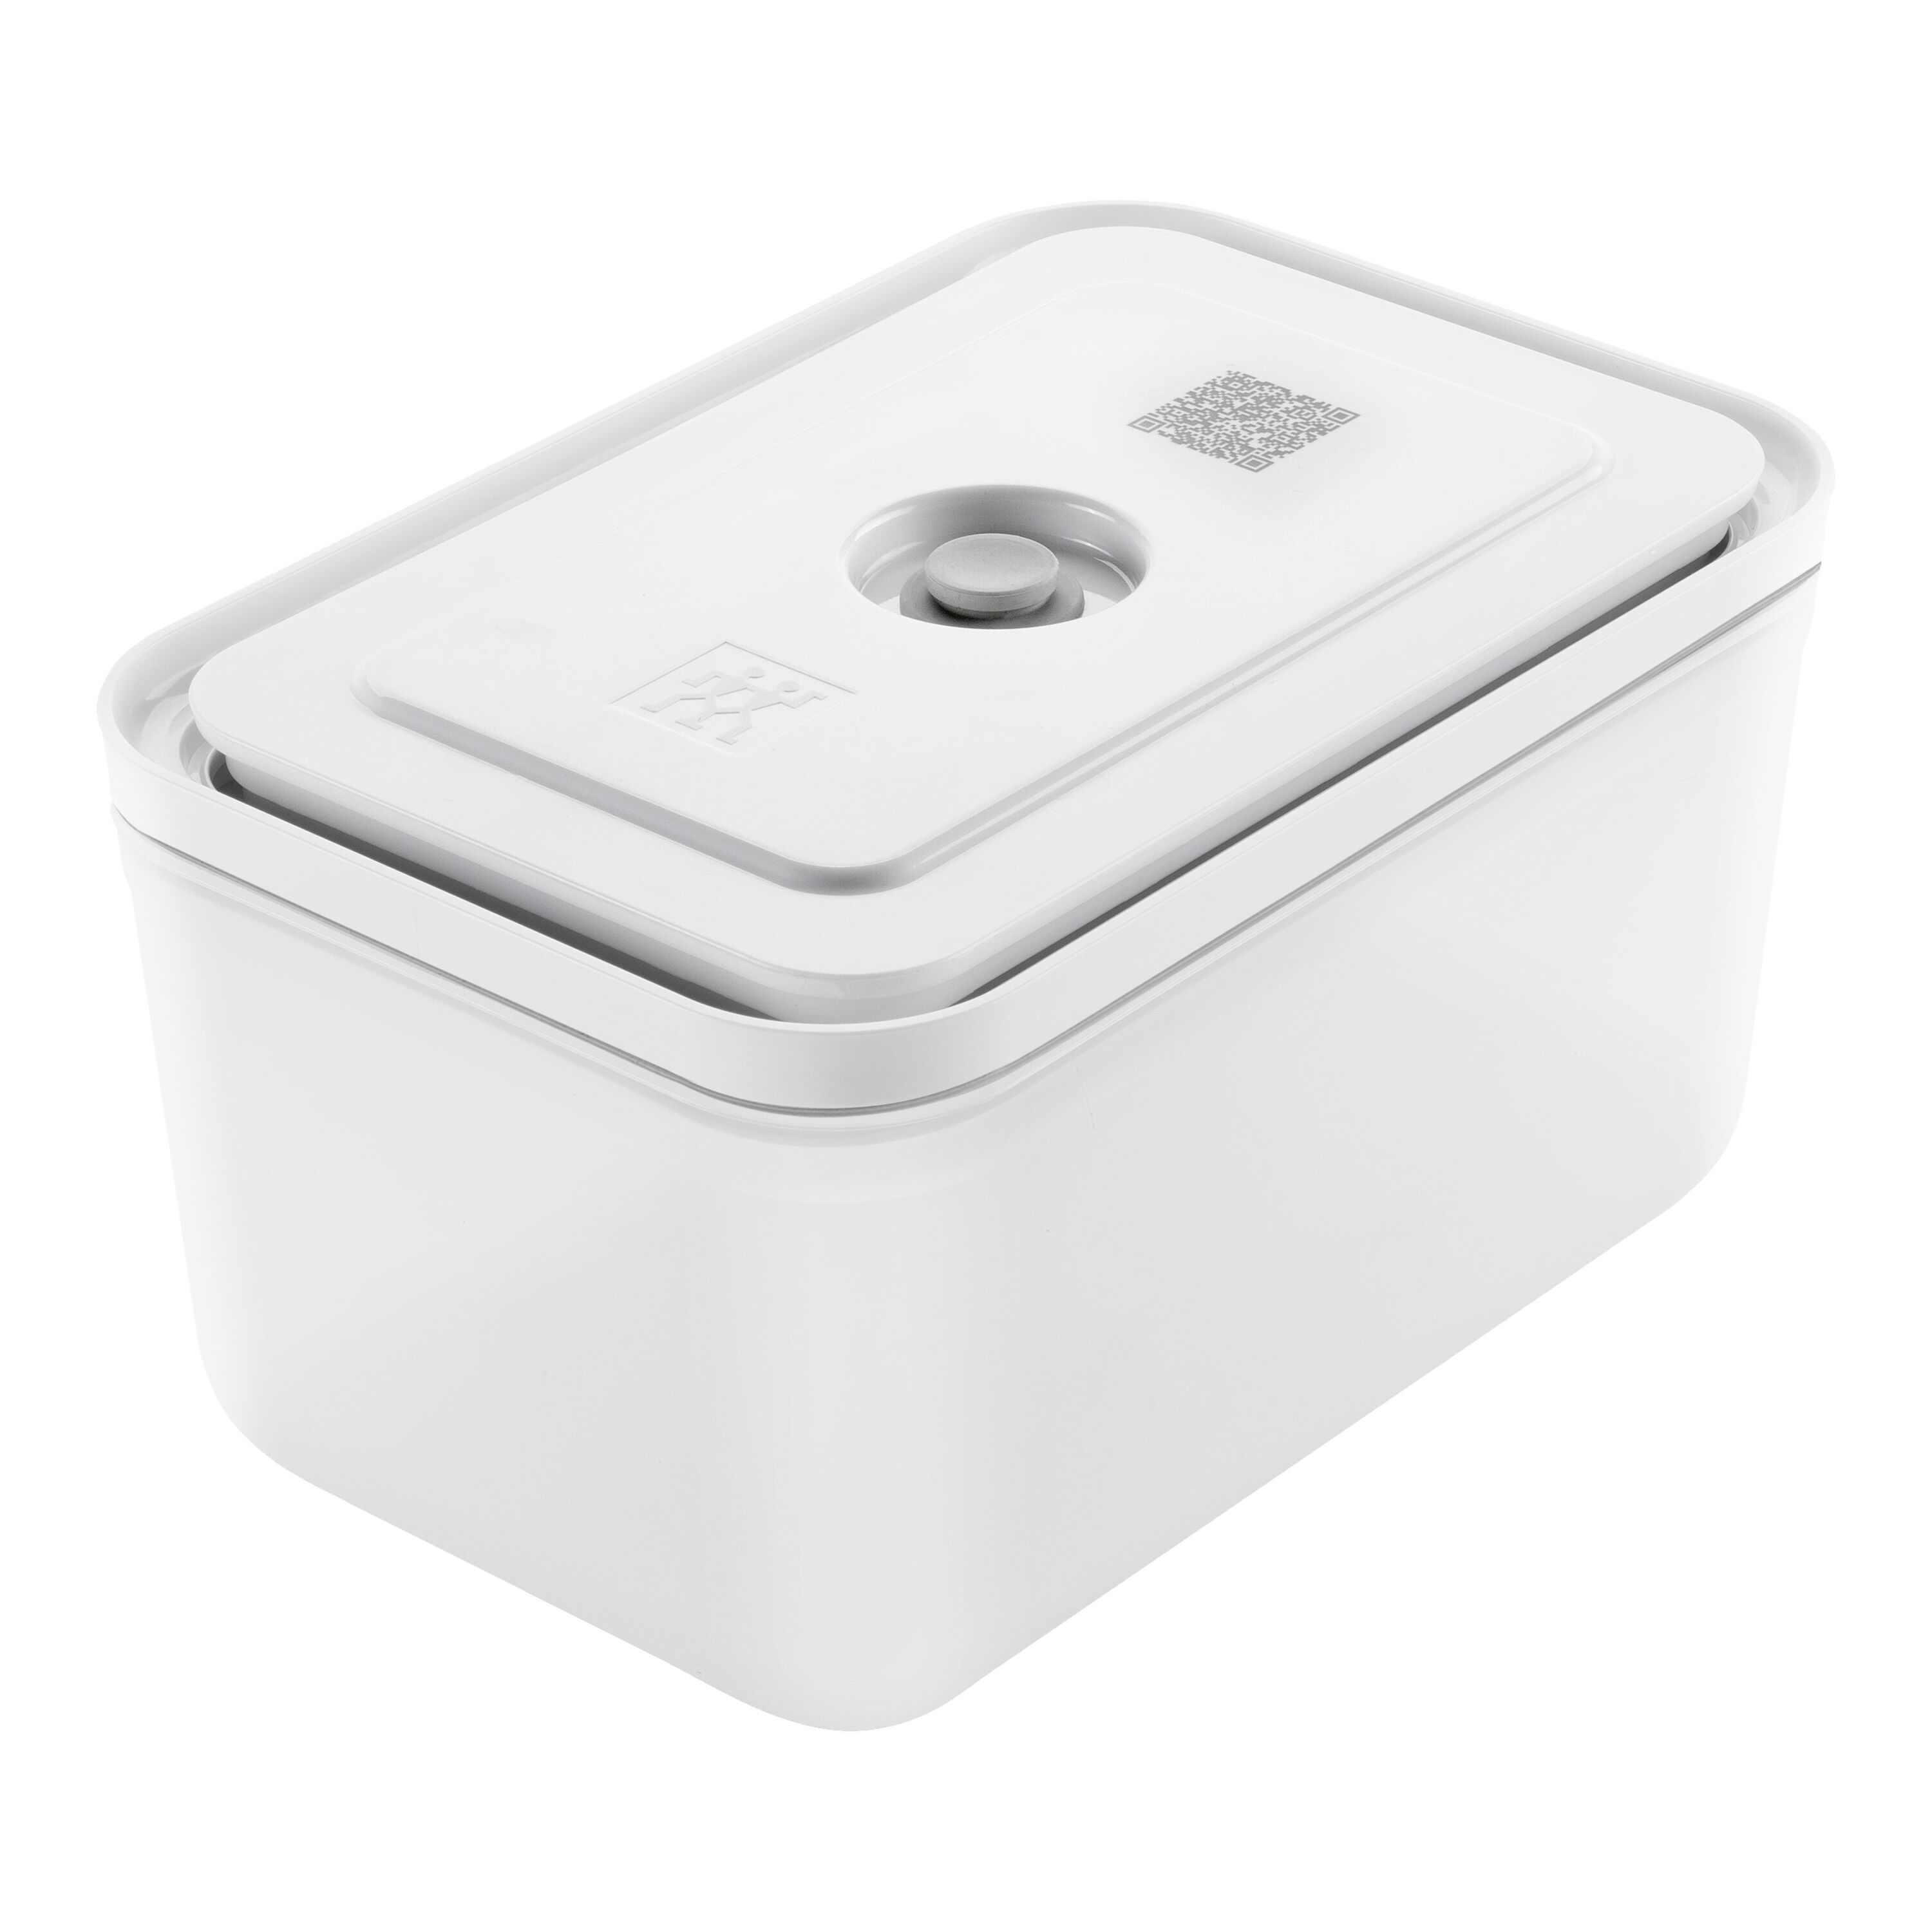 Zwilling Fresh & Save Plastic Vacuum Lunch Box, Large